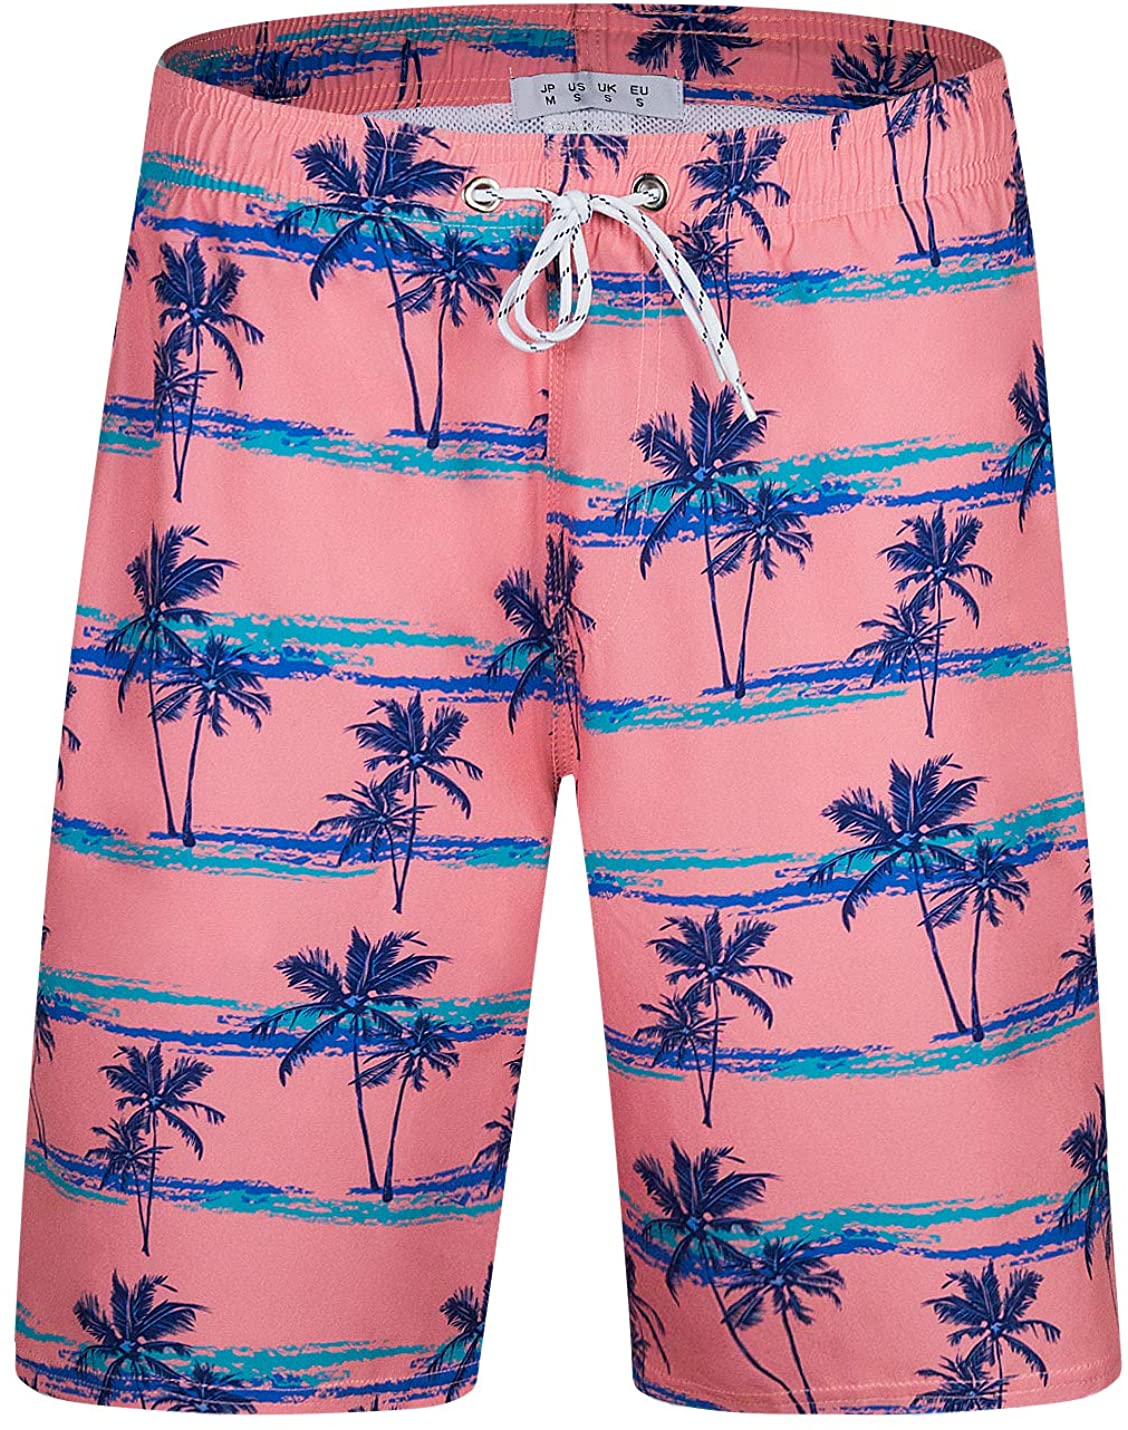 ELETOP Mens Swim Trunks Quick Dry Board Shorts Beach Holiday Swimwear Print Bathing Suit 